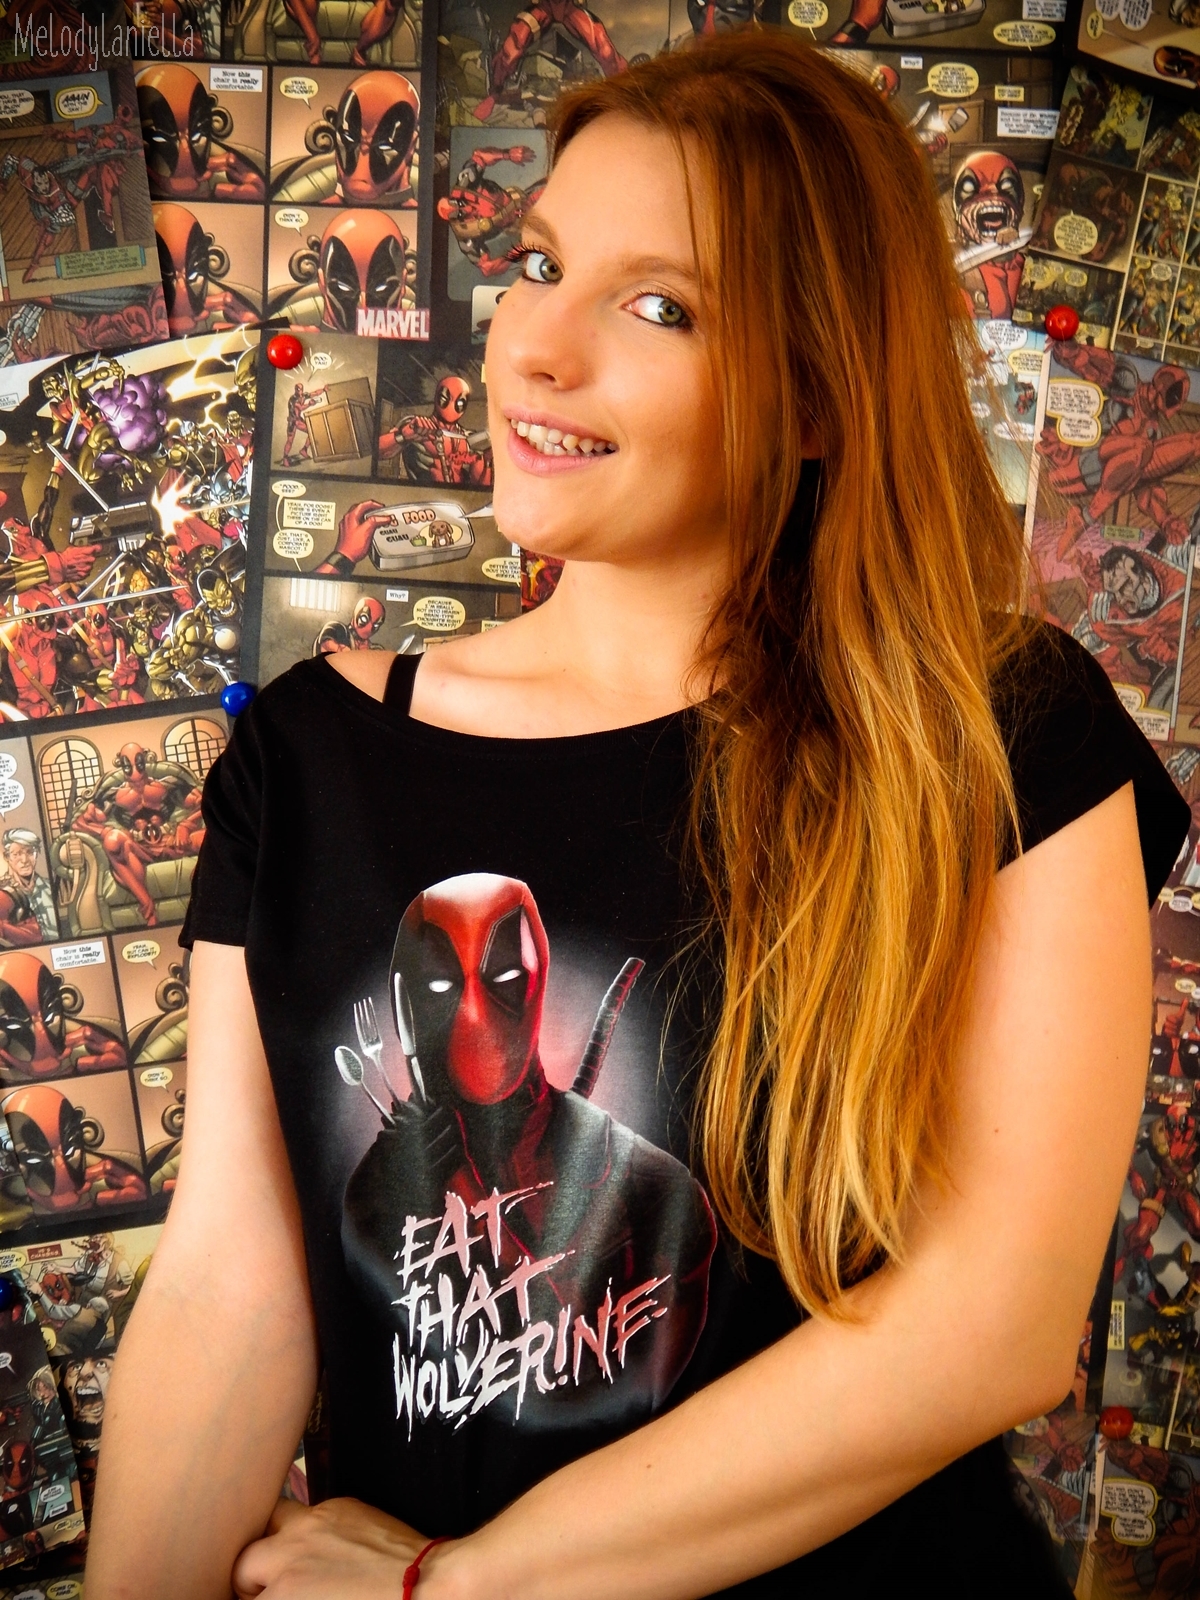 deadpool women tshirt wolwerine melodylaniella koszulkowo ubrania i gadzety dla geekow komiksy marvel dc